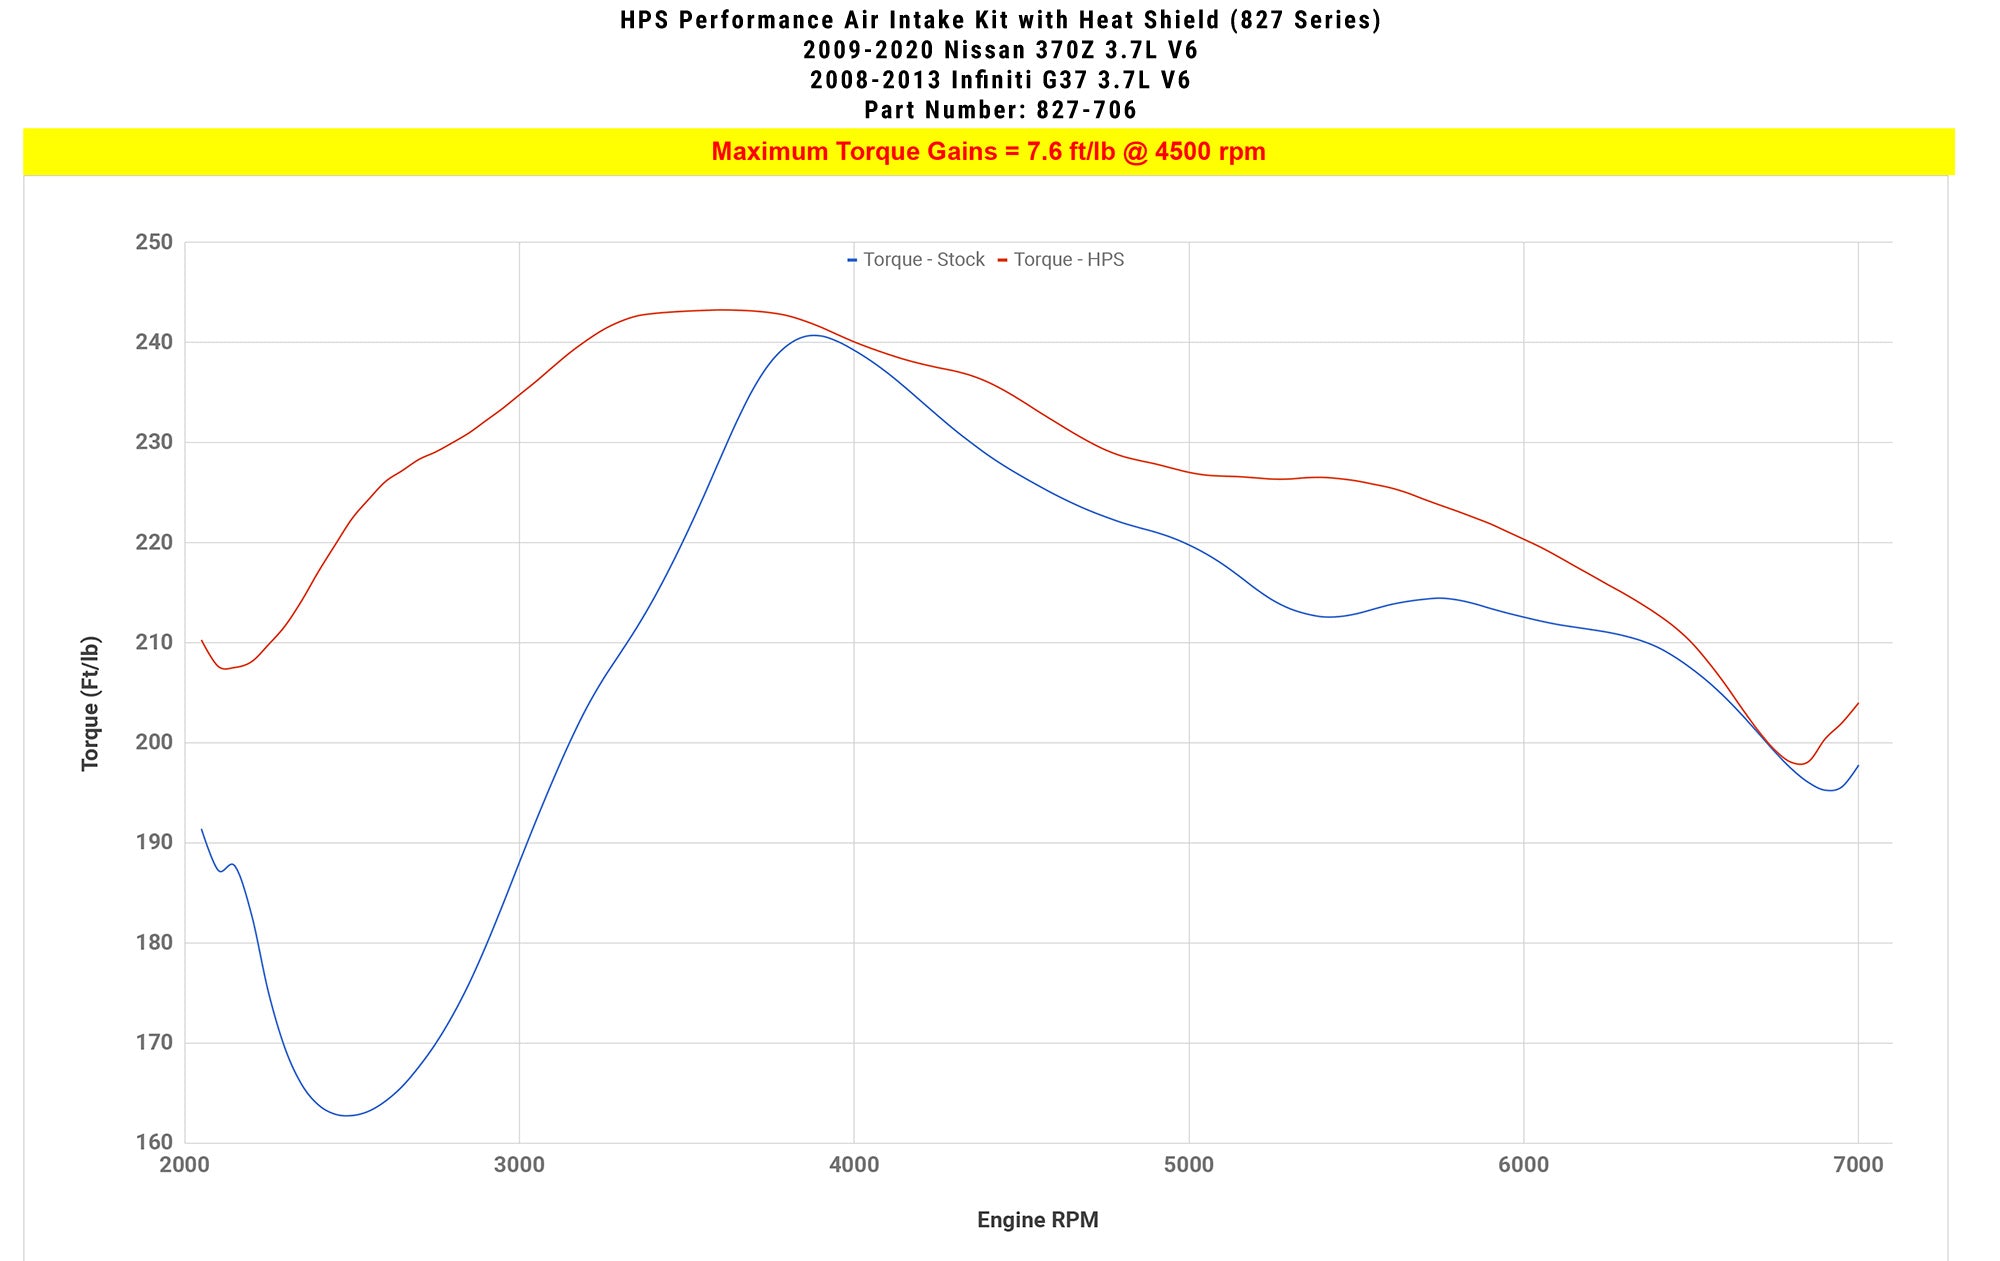 HPS Shortram Air Intake Kit 827-706 increase torque +7.6 ft/lbs on Infiniti 2008-2013 G37 3.7L V6